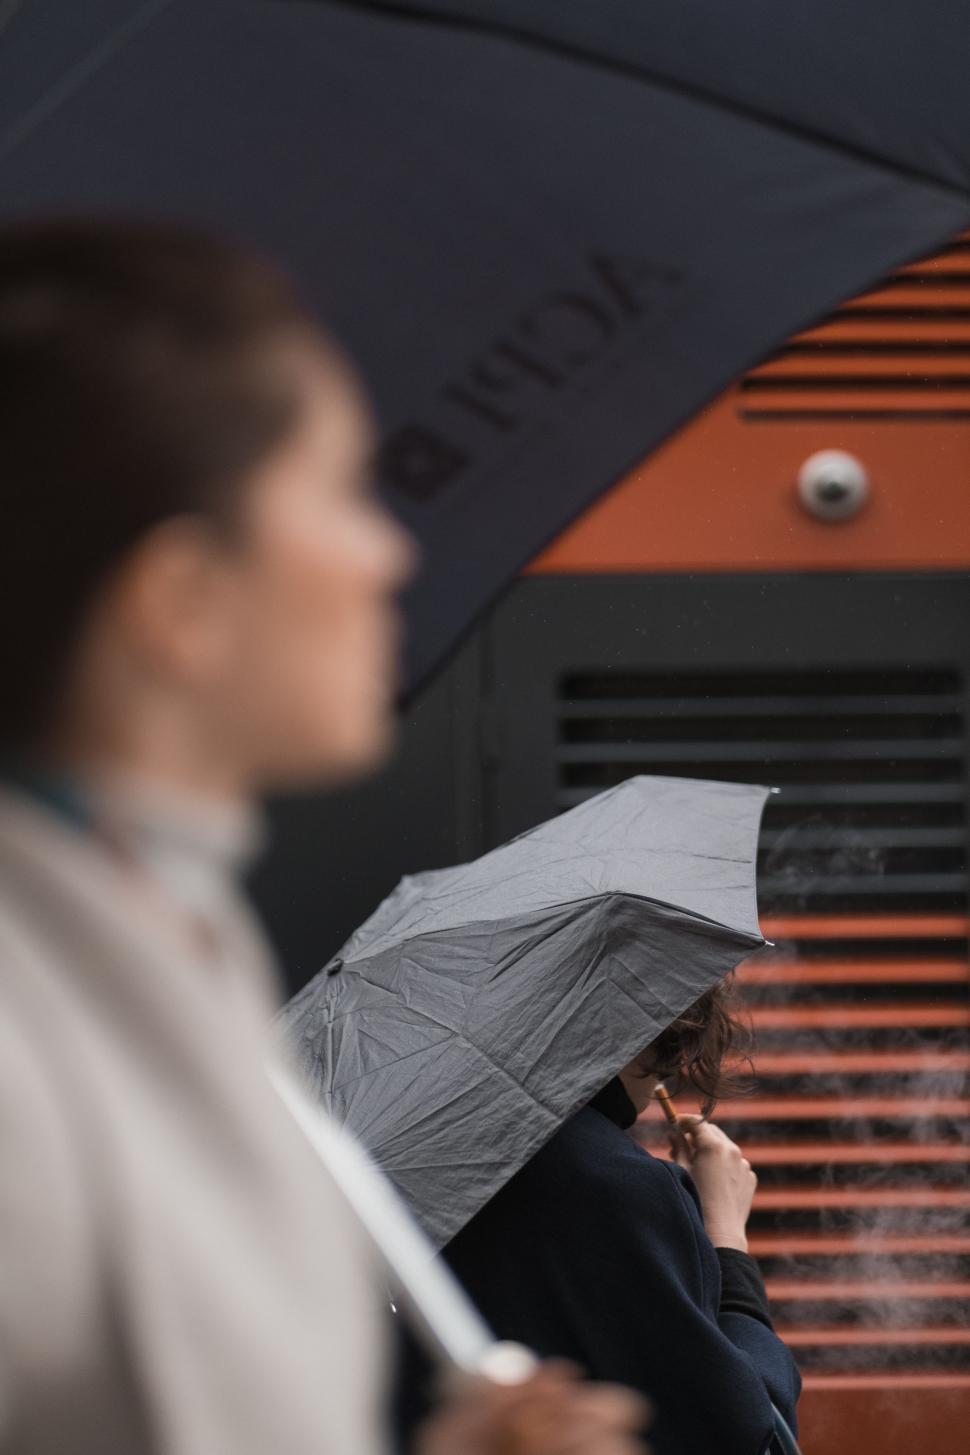 Free Image of Woman Walking Down Street Holding Umbrella 